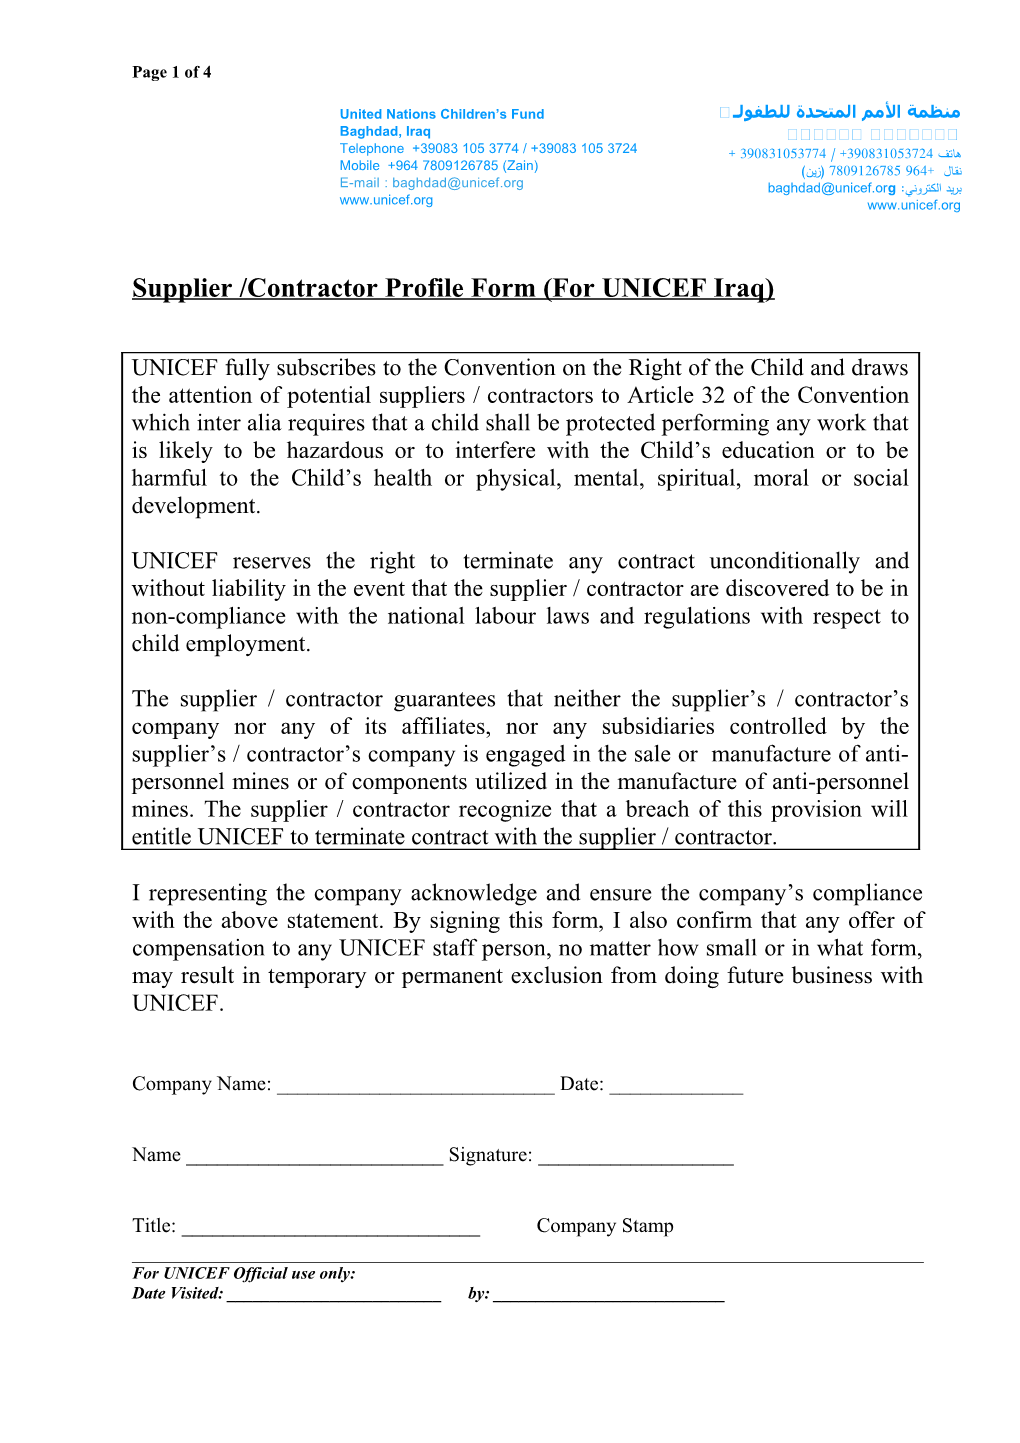 Supplier /Contractor Profile Form (For UNICEF Iraq)